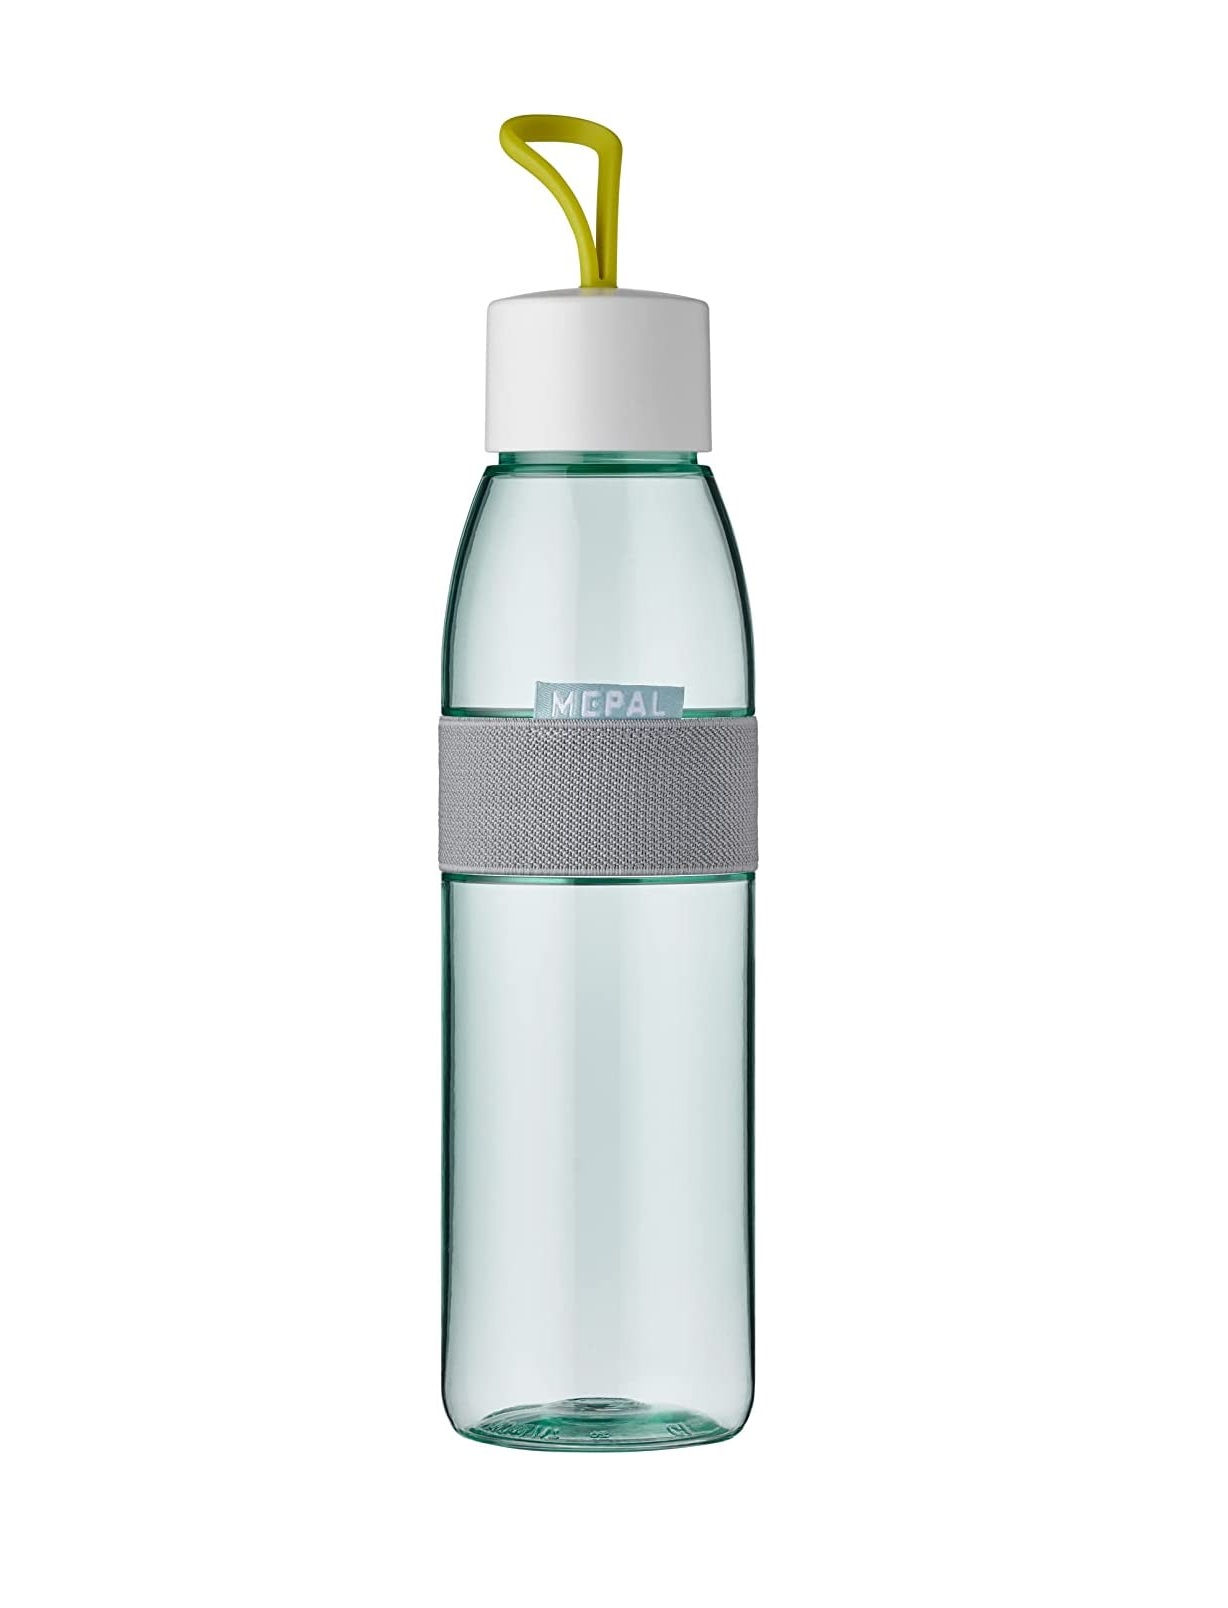 Inhalt Vibe Edition Ellipse-Lemon Trinkflasche Limited Vibe Flasche, – ml MEPAL 500 Lemon